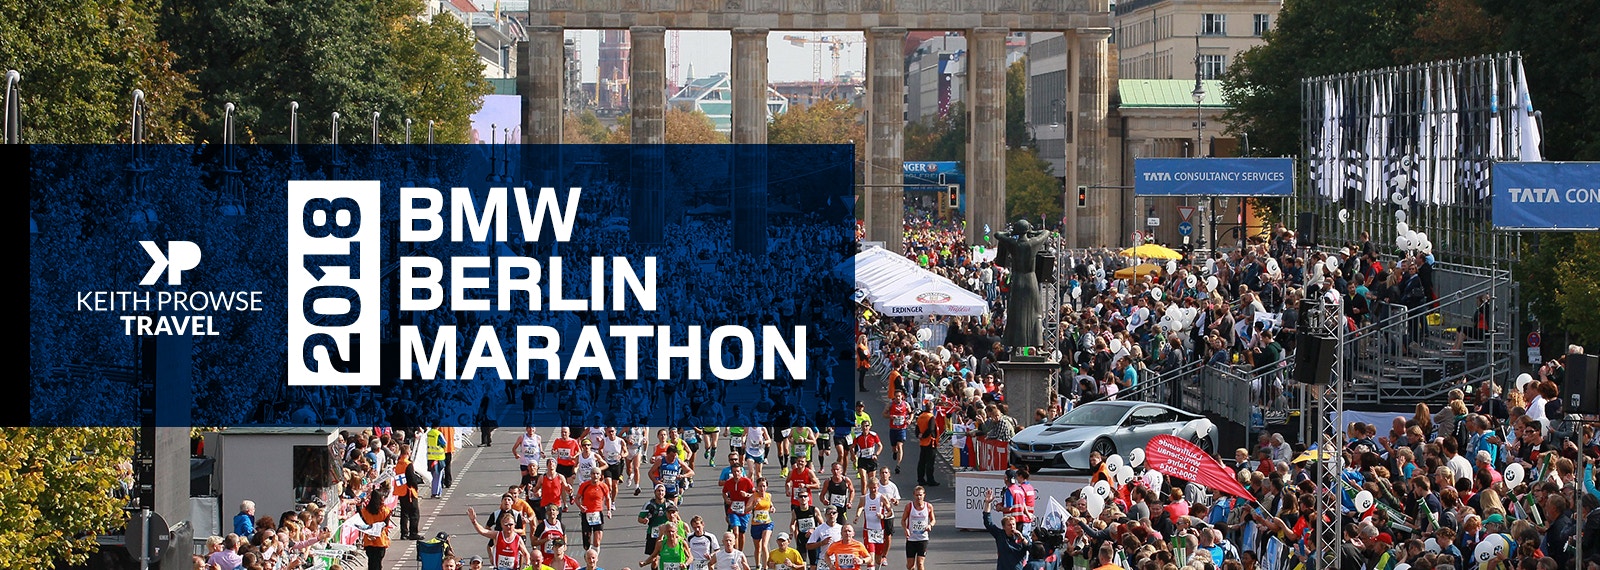 Berlin Marathon 2018|Tirunesh Dibaba|Inline Skater beim Berlin Marathon|Kostüme beim Marathon|Johanniter|Horst Milde